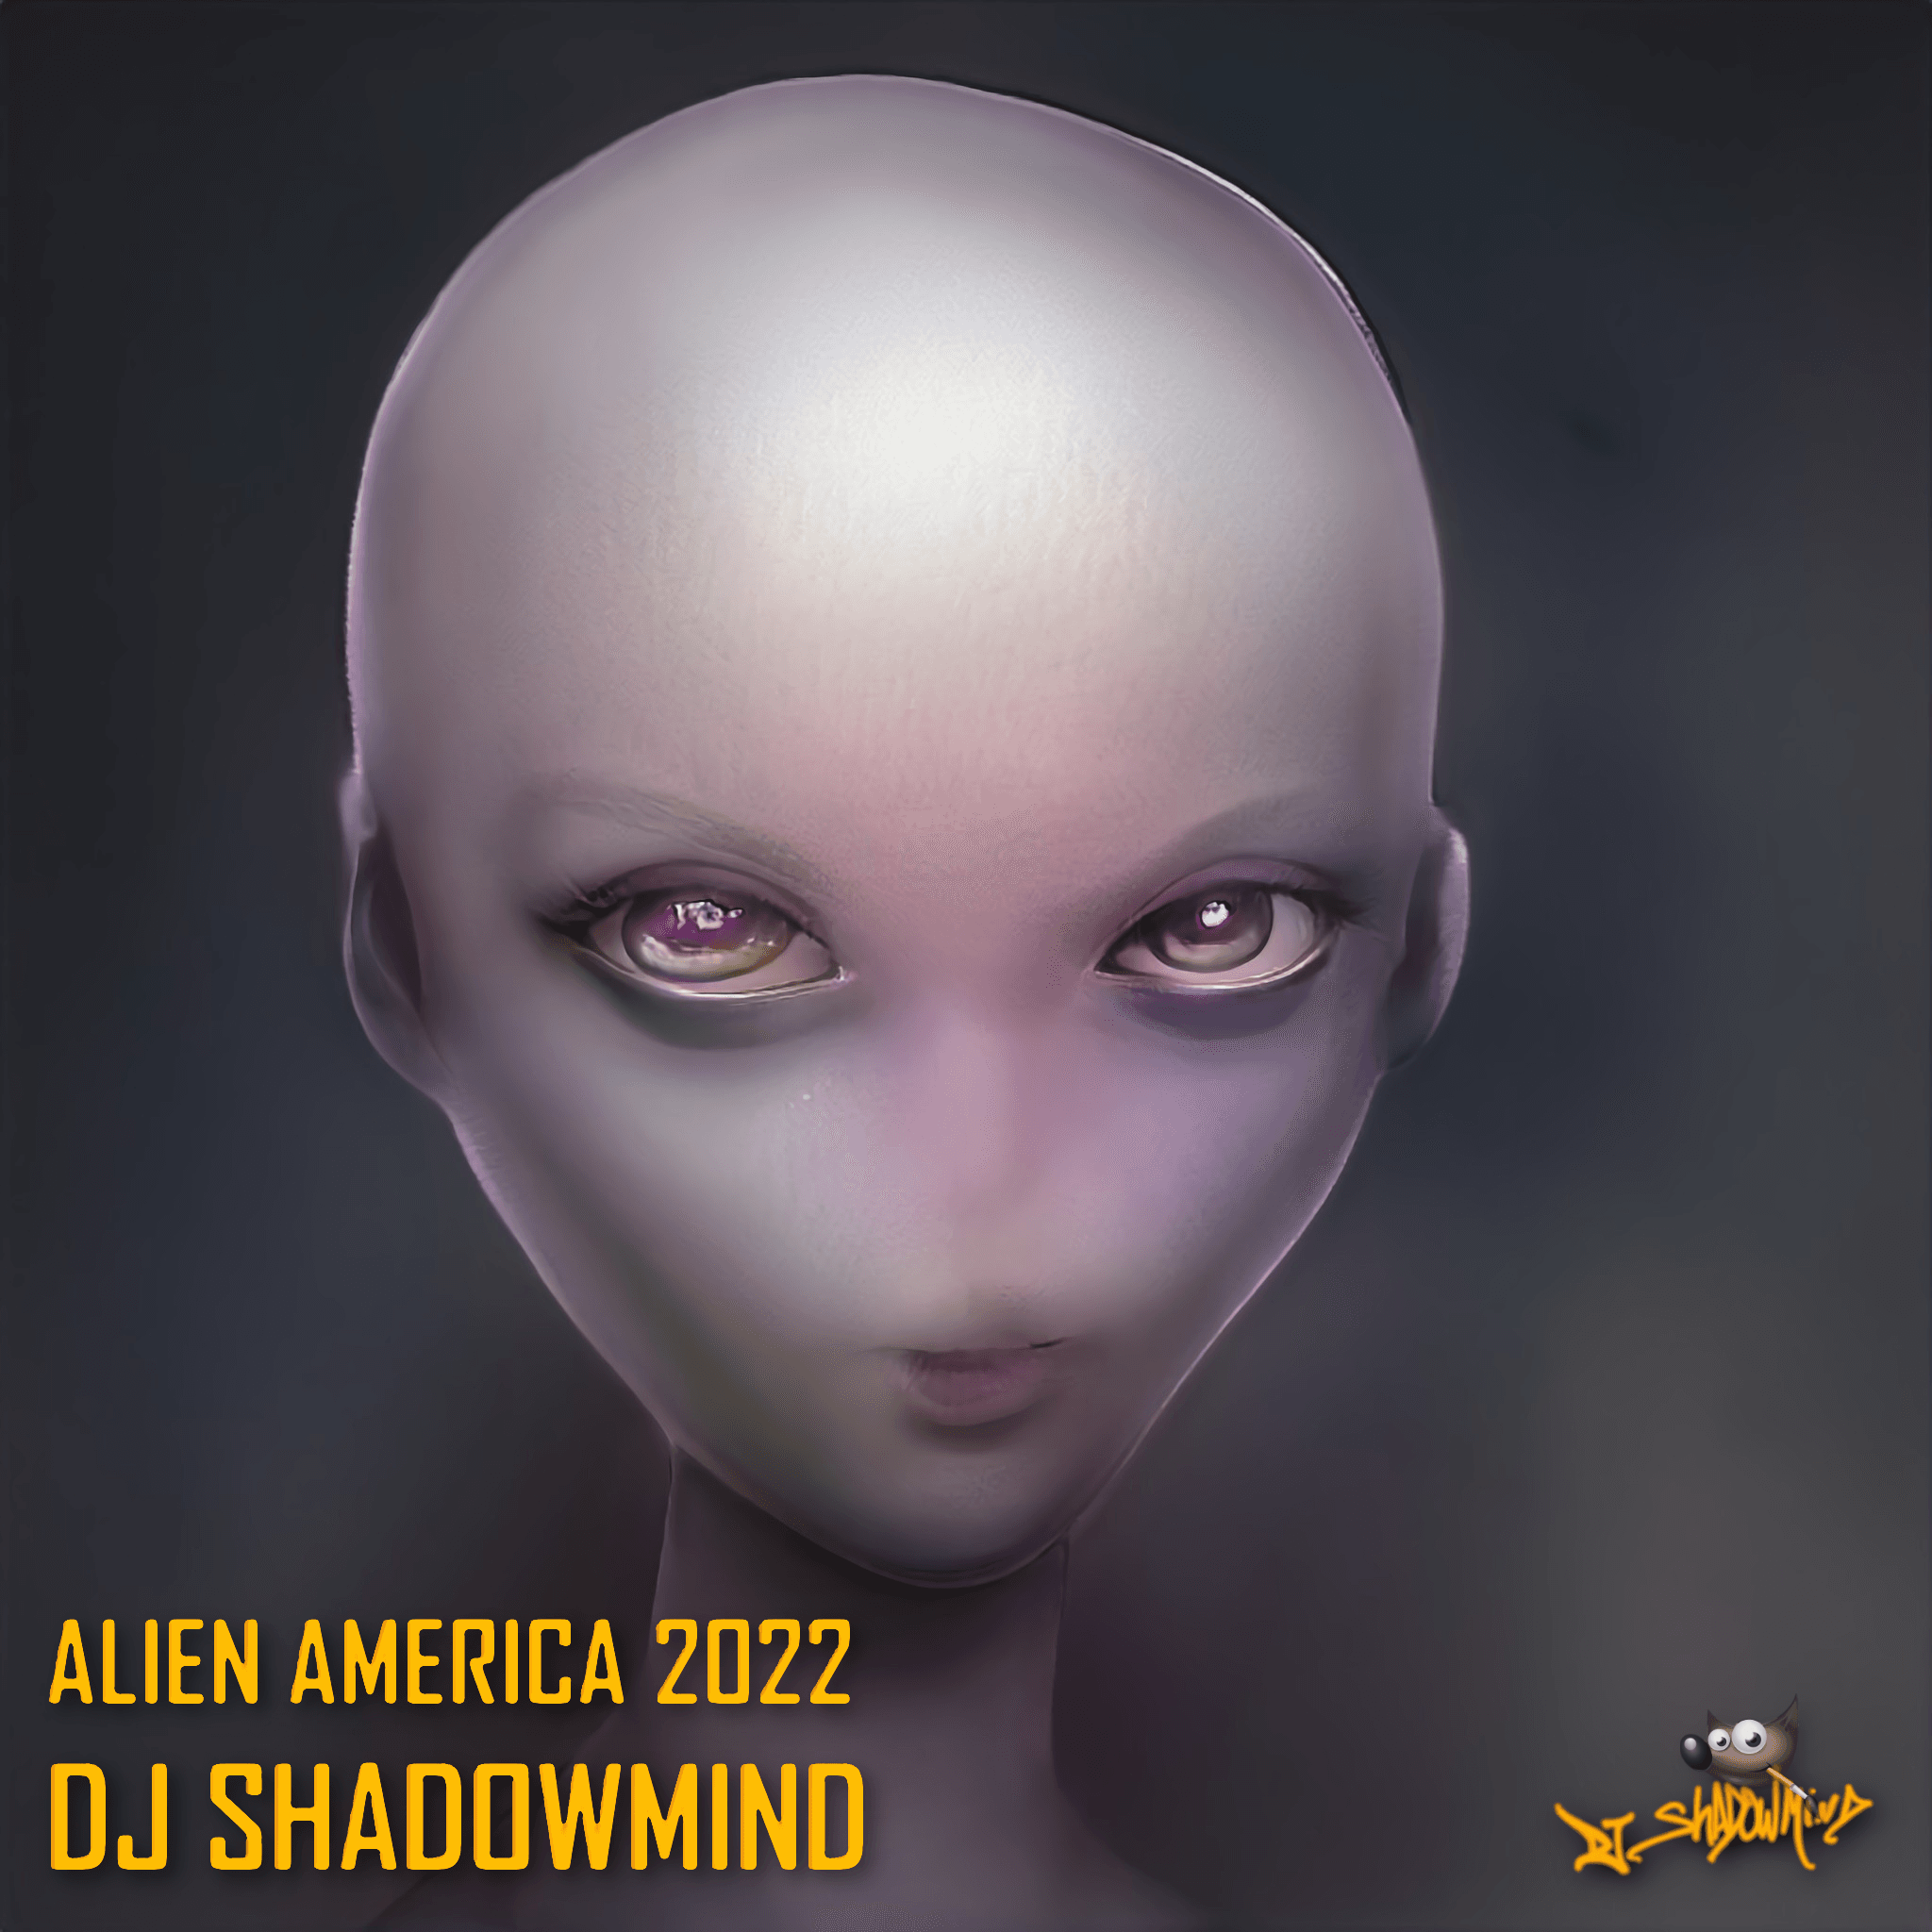 Alien America 2022 - Agent 070